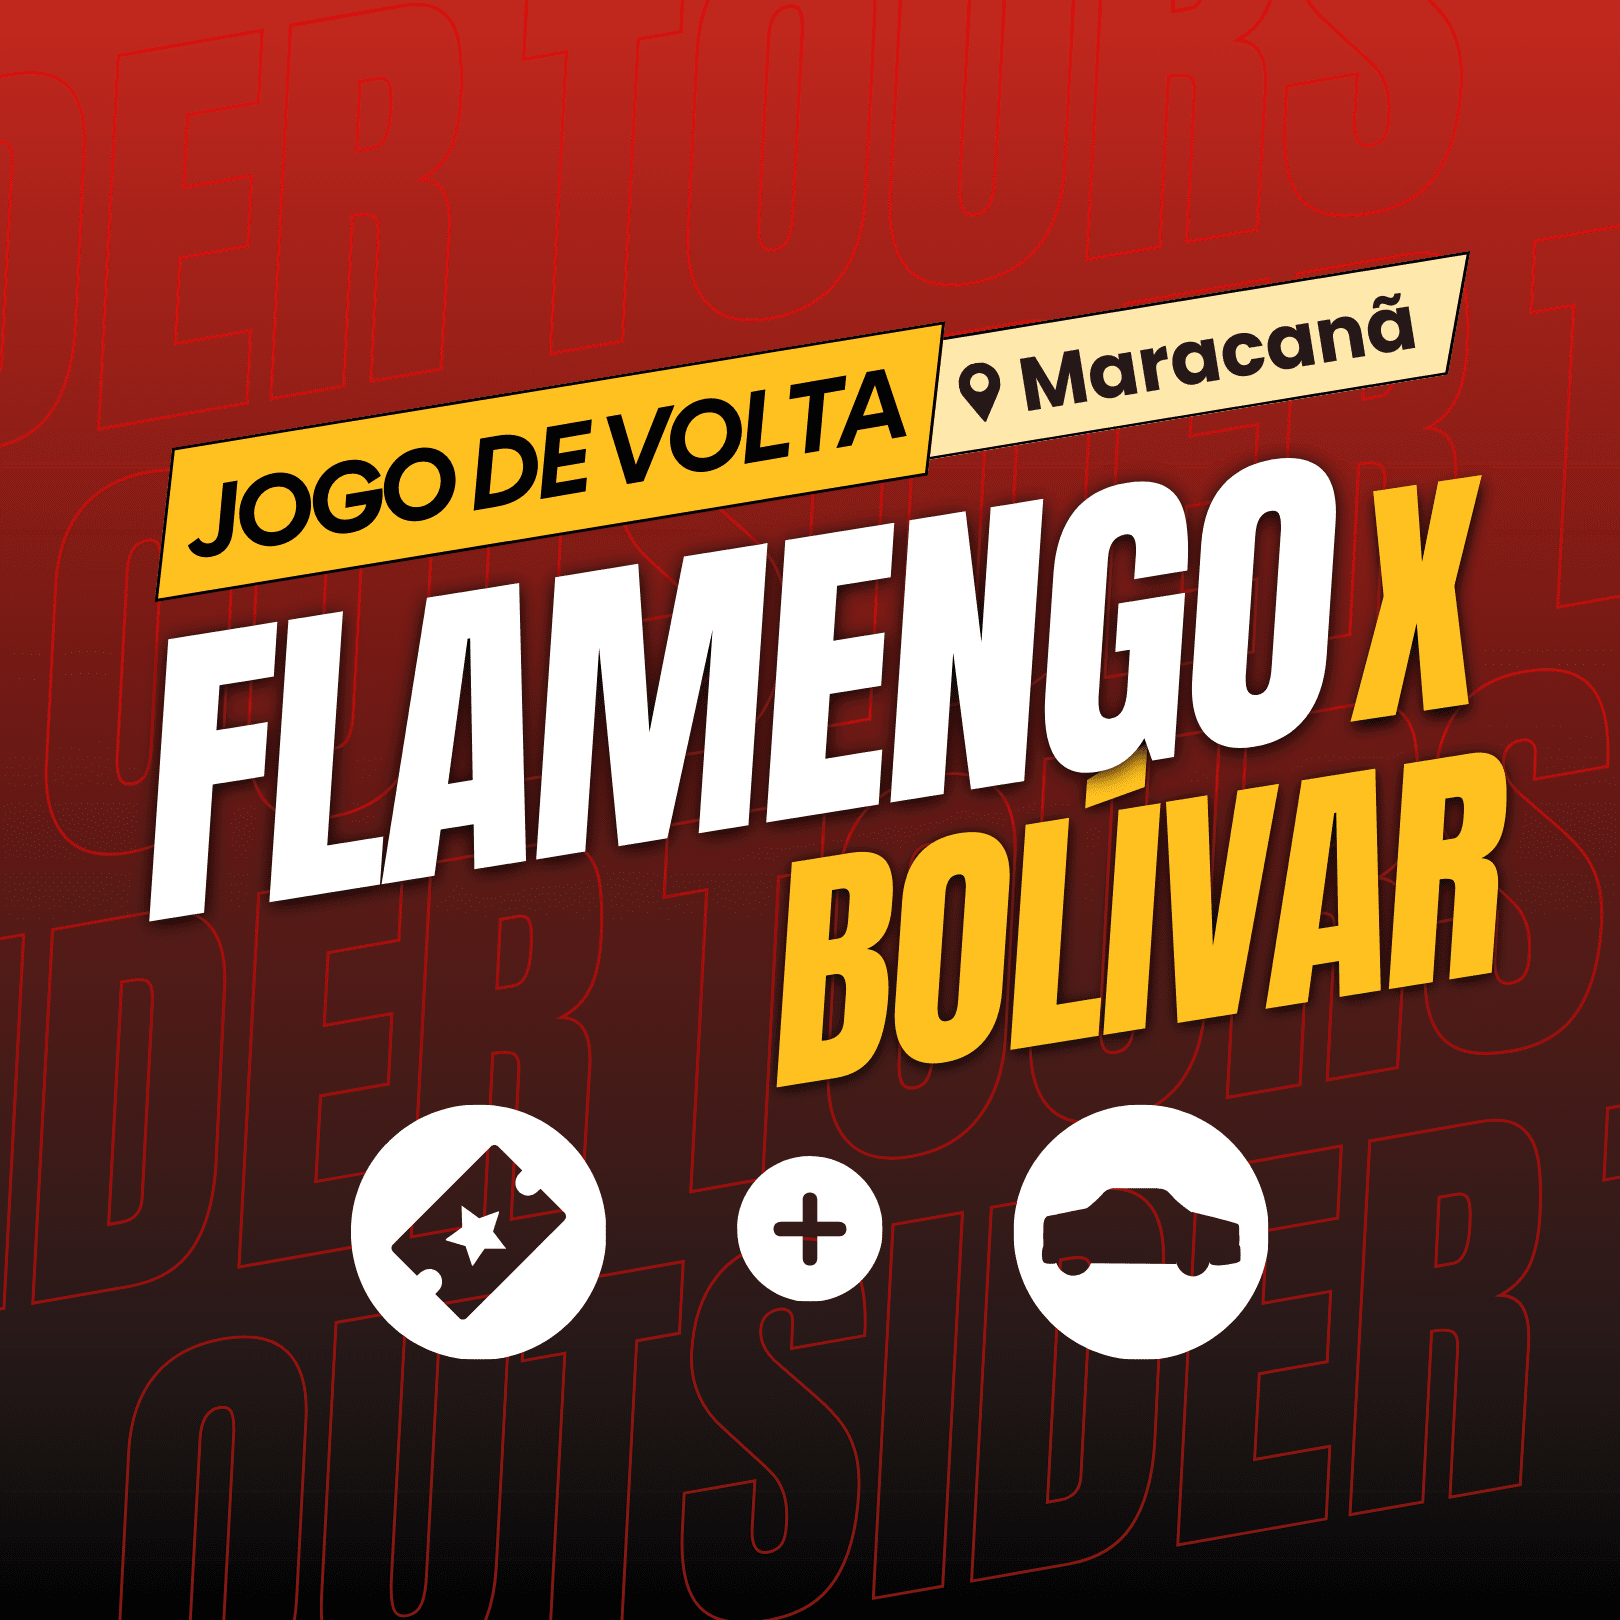 Fase de Grupos 5ª rodada Flamengo x Bolívar (Maracanã)